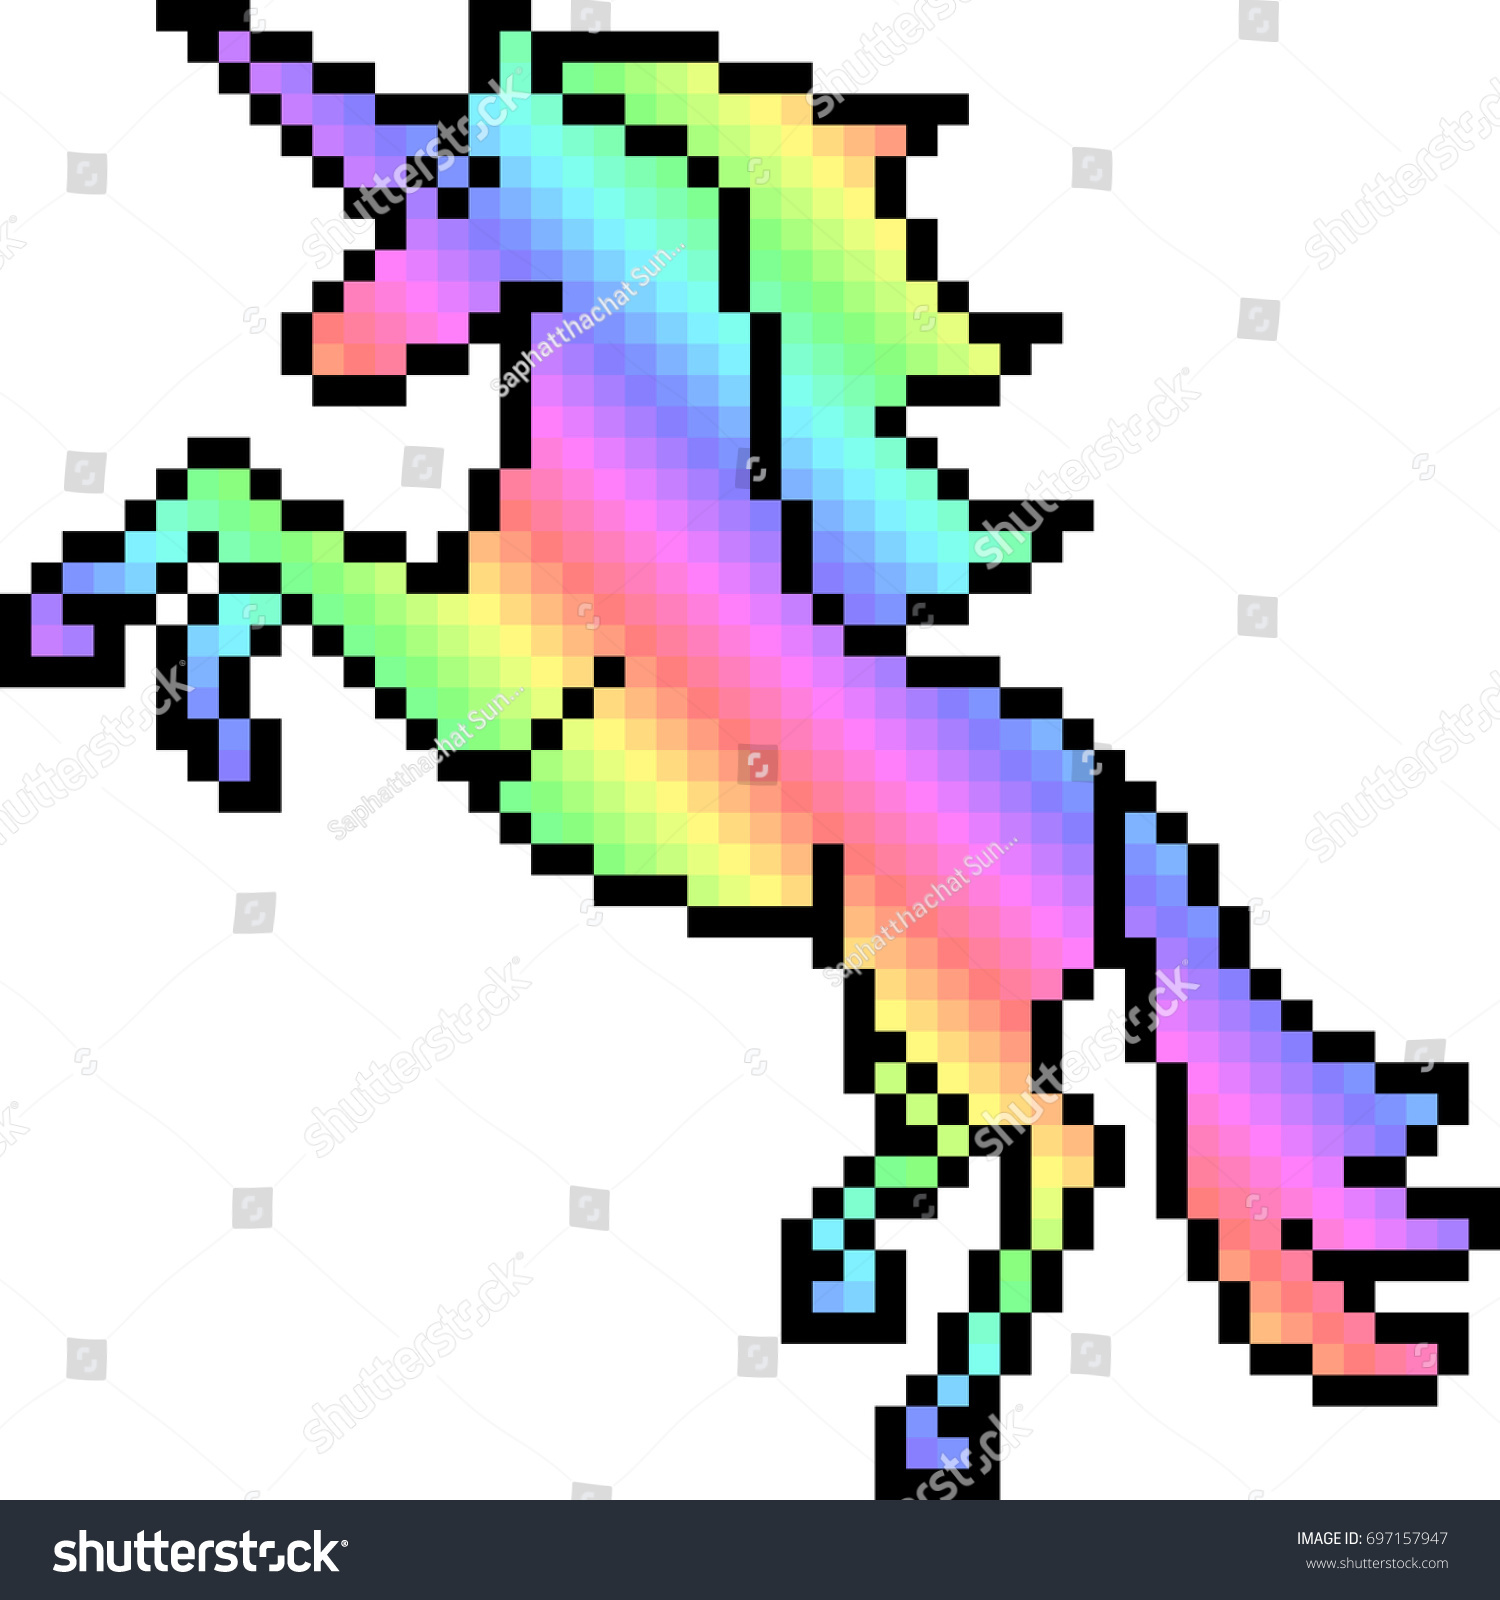 Image Vectorielle De Stock De Vector Pixel Art Unicorn